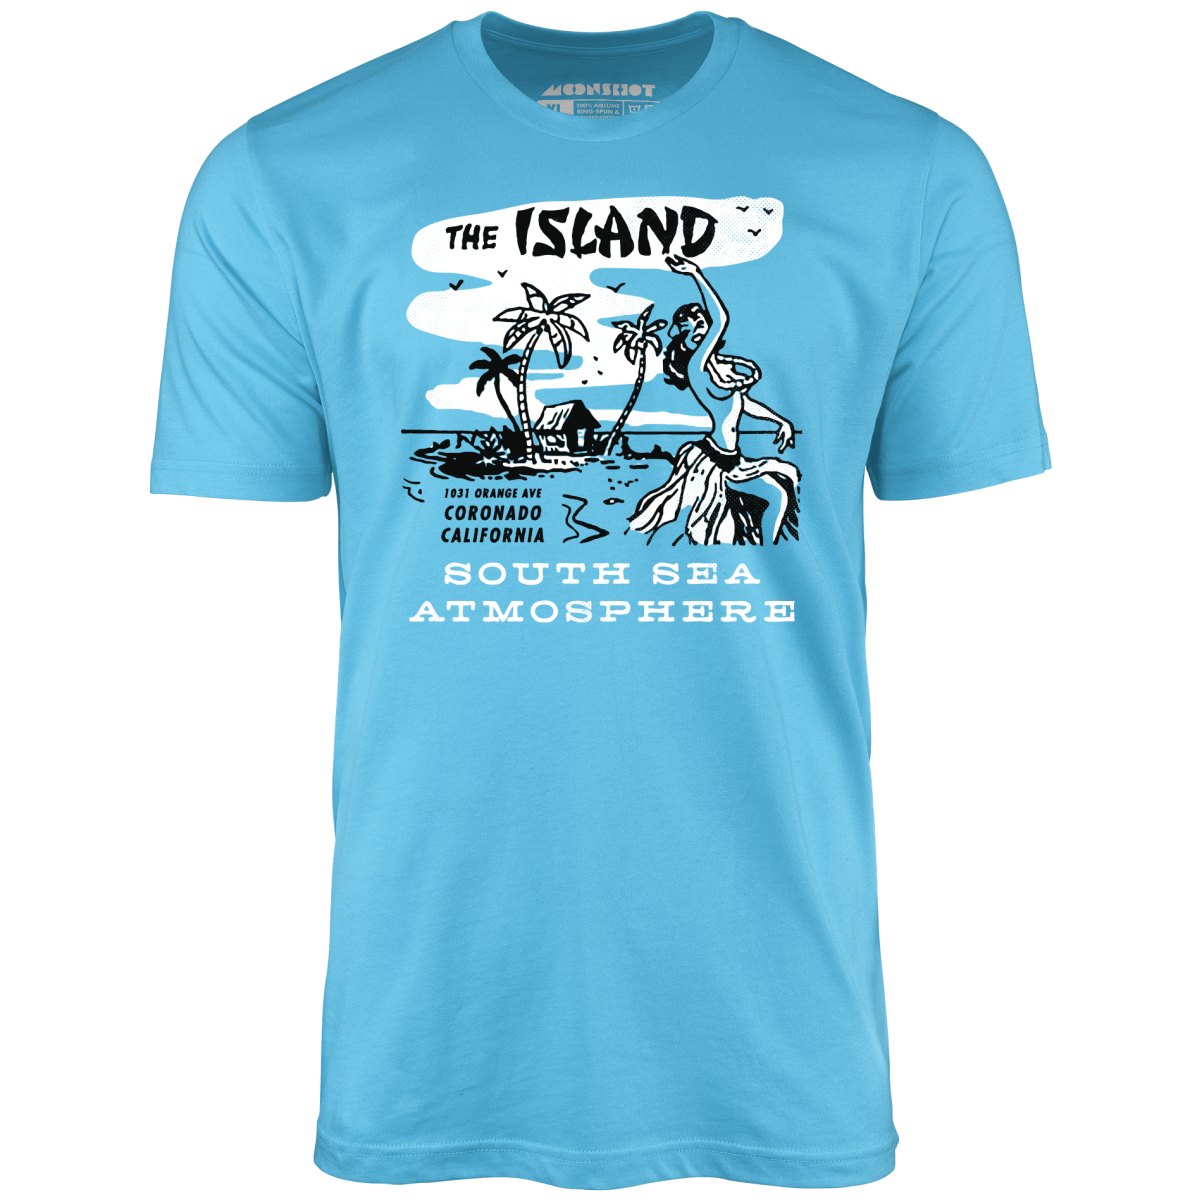 The Island Cafe v2 - Coronado, CA - Vintage Tiki Bar - Unisex T-Shirt